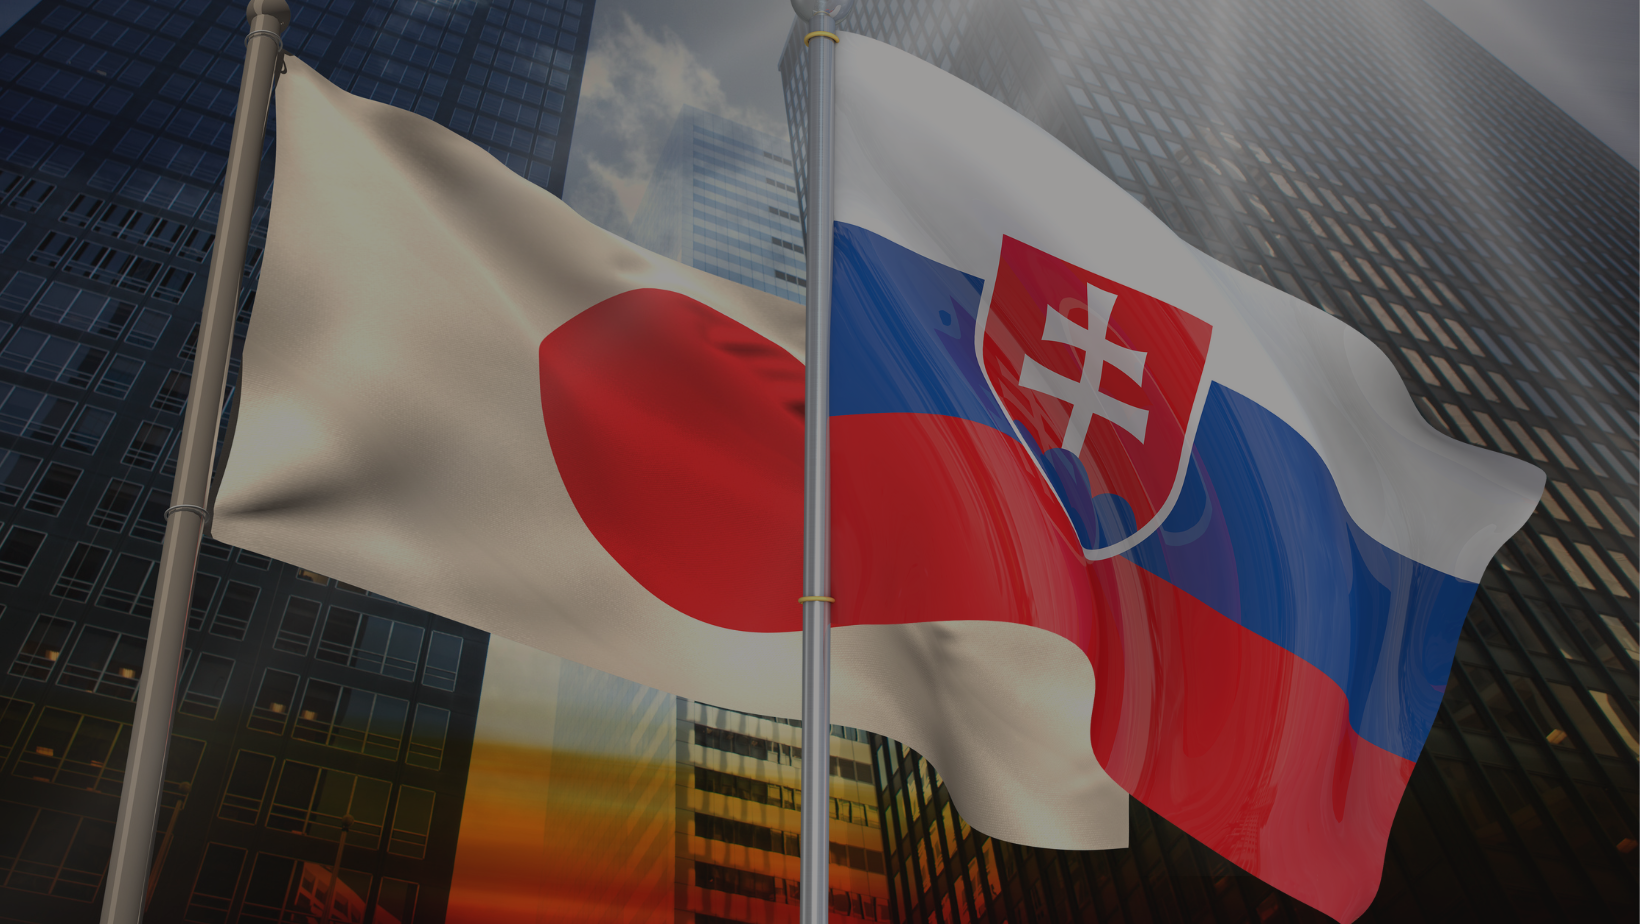 Slovakia-Japan relations: Valuable, yet underestimated